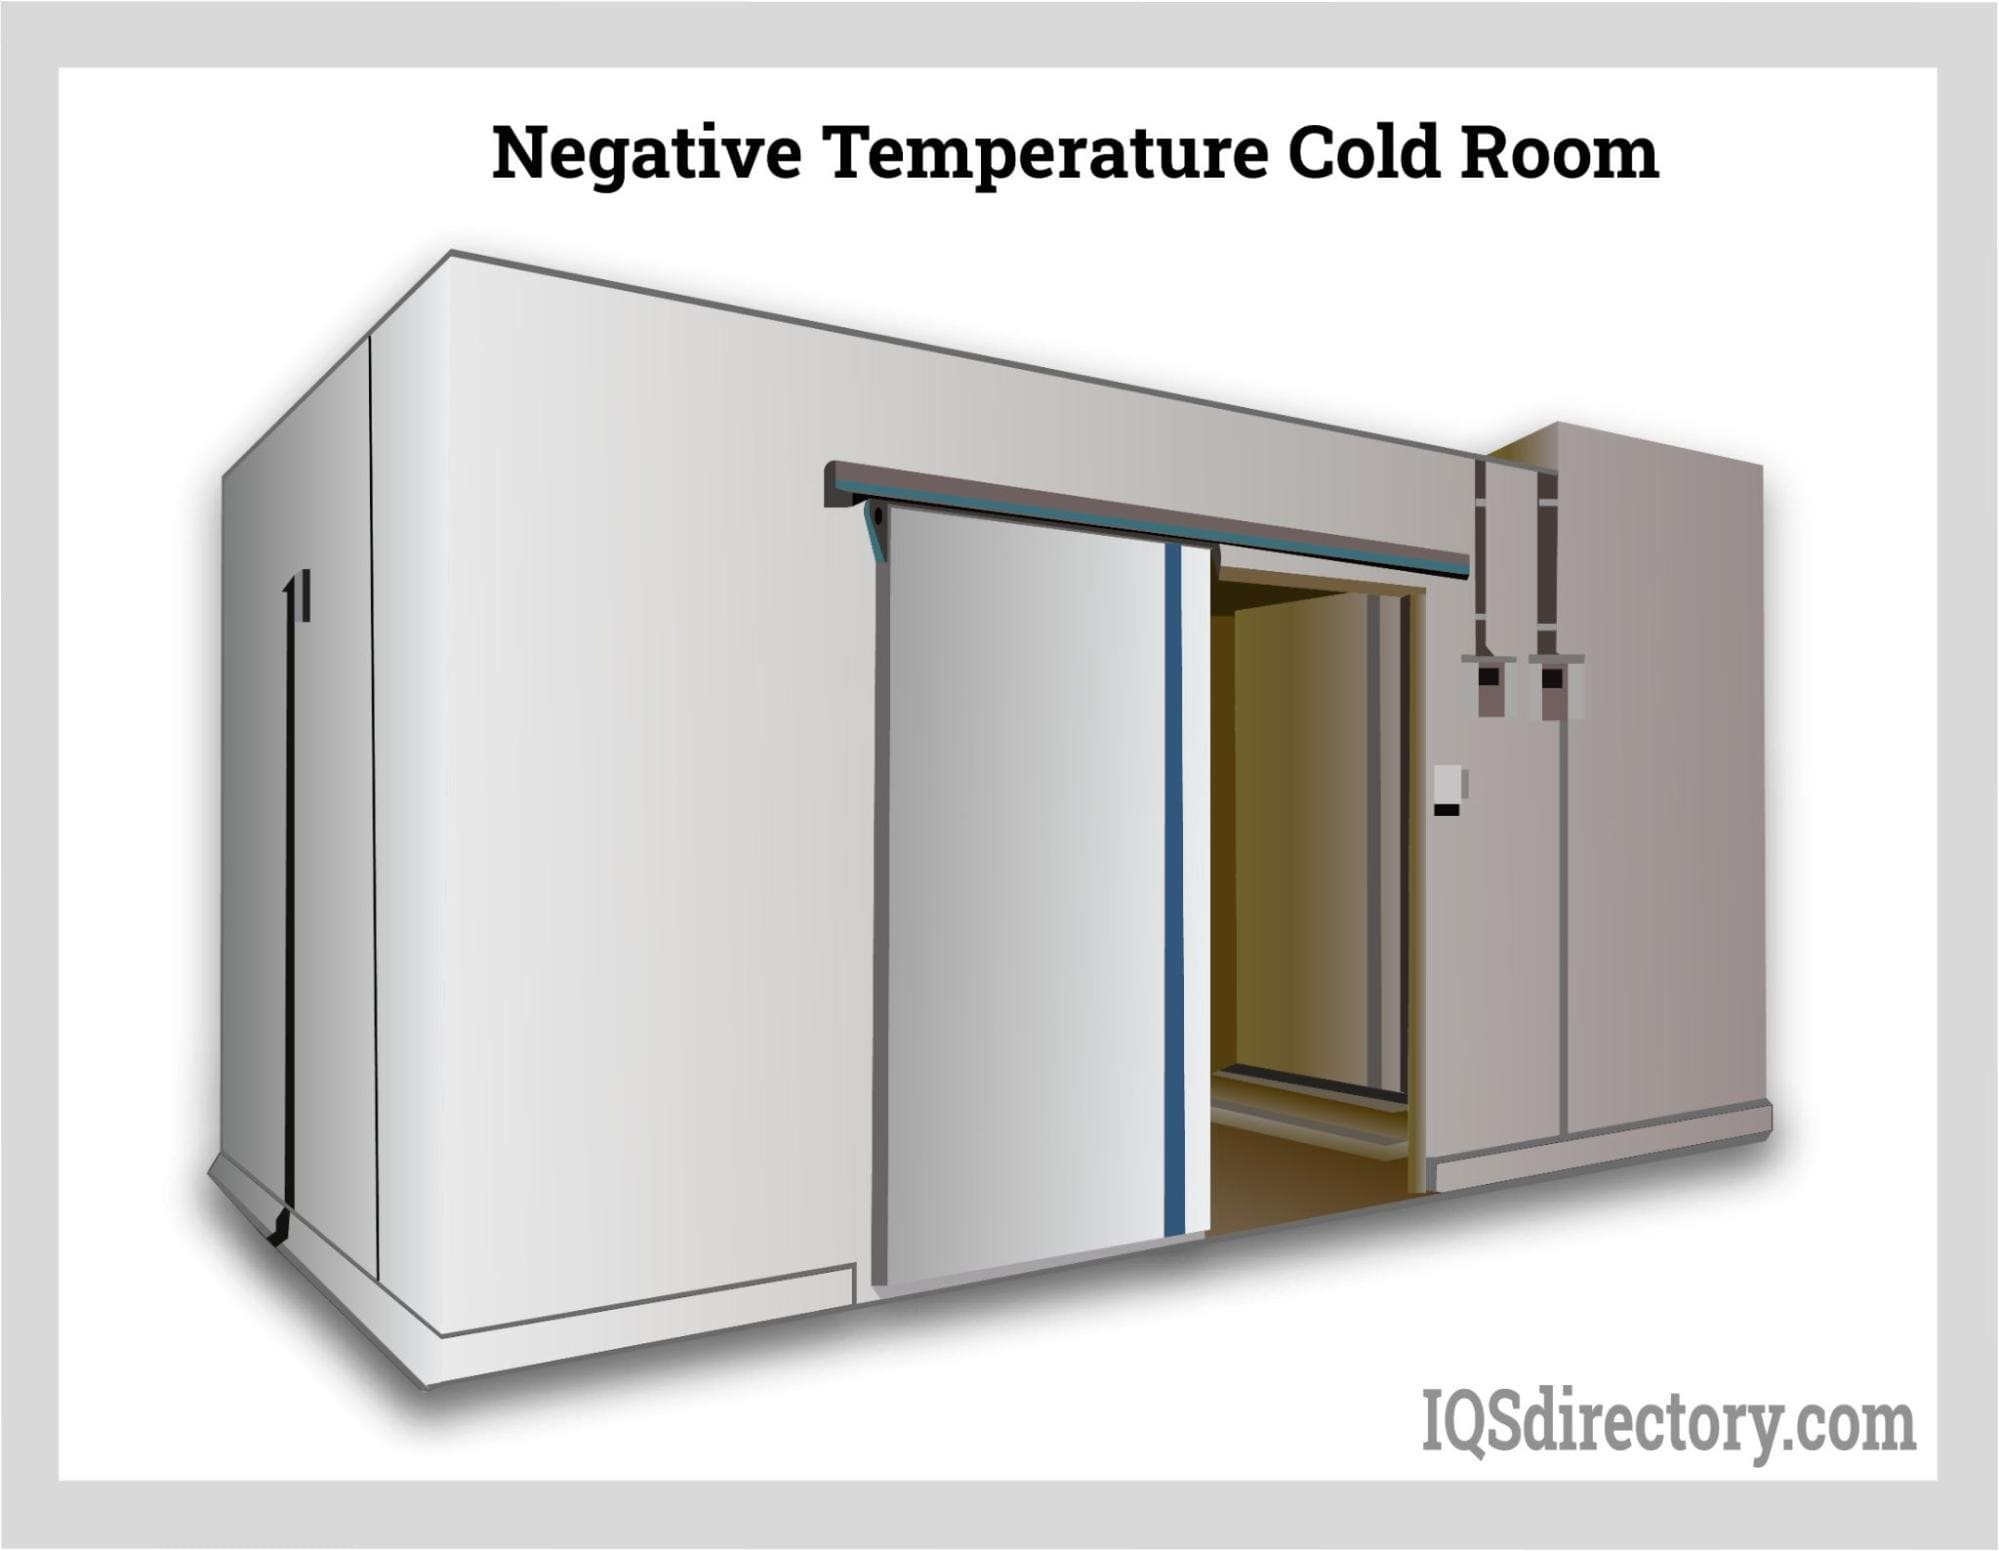 Negative Temperature Cold Room